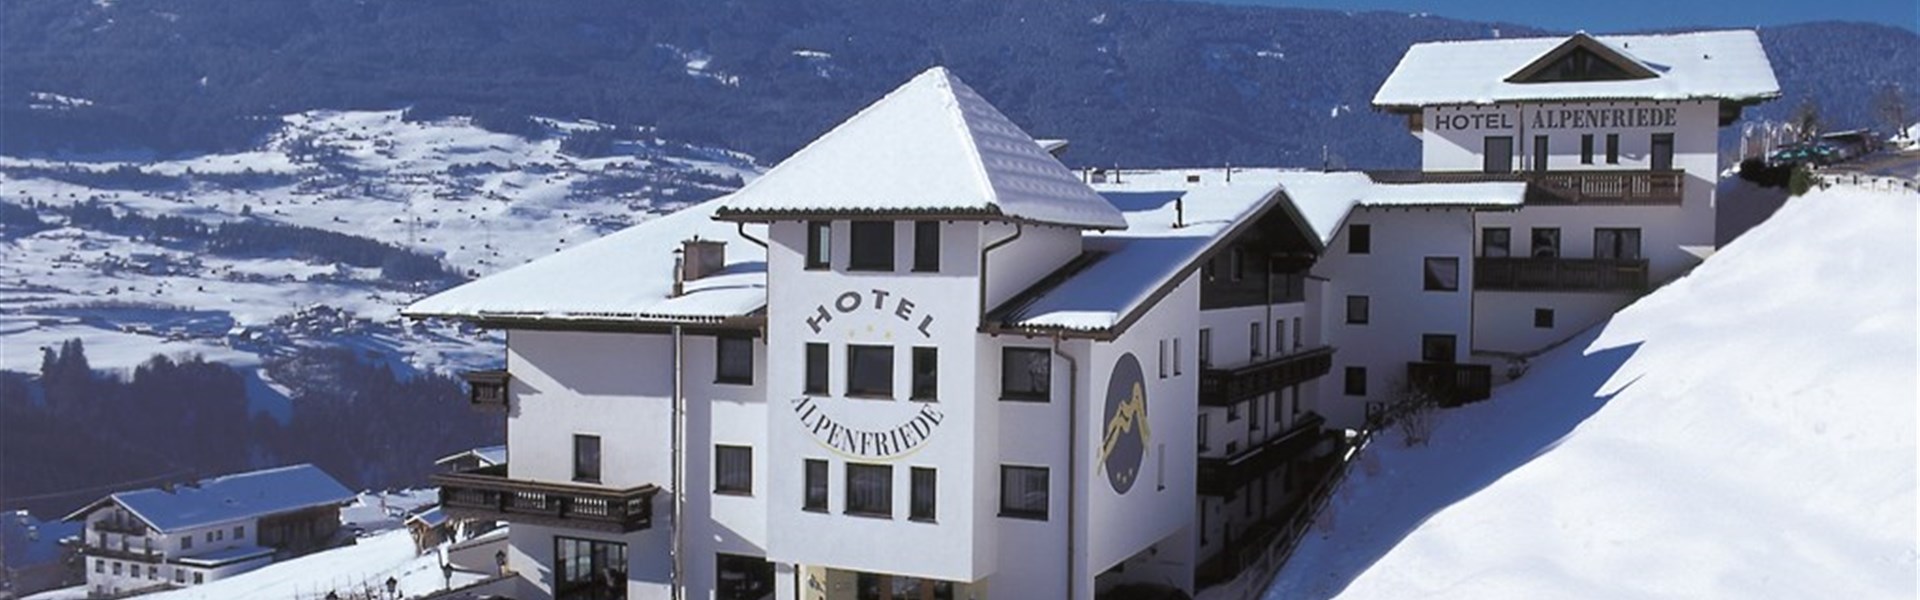 Hotel Alpenfriede (W) - 